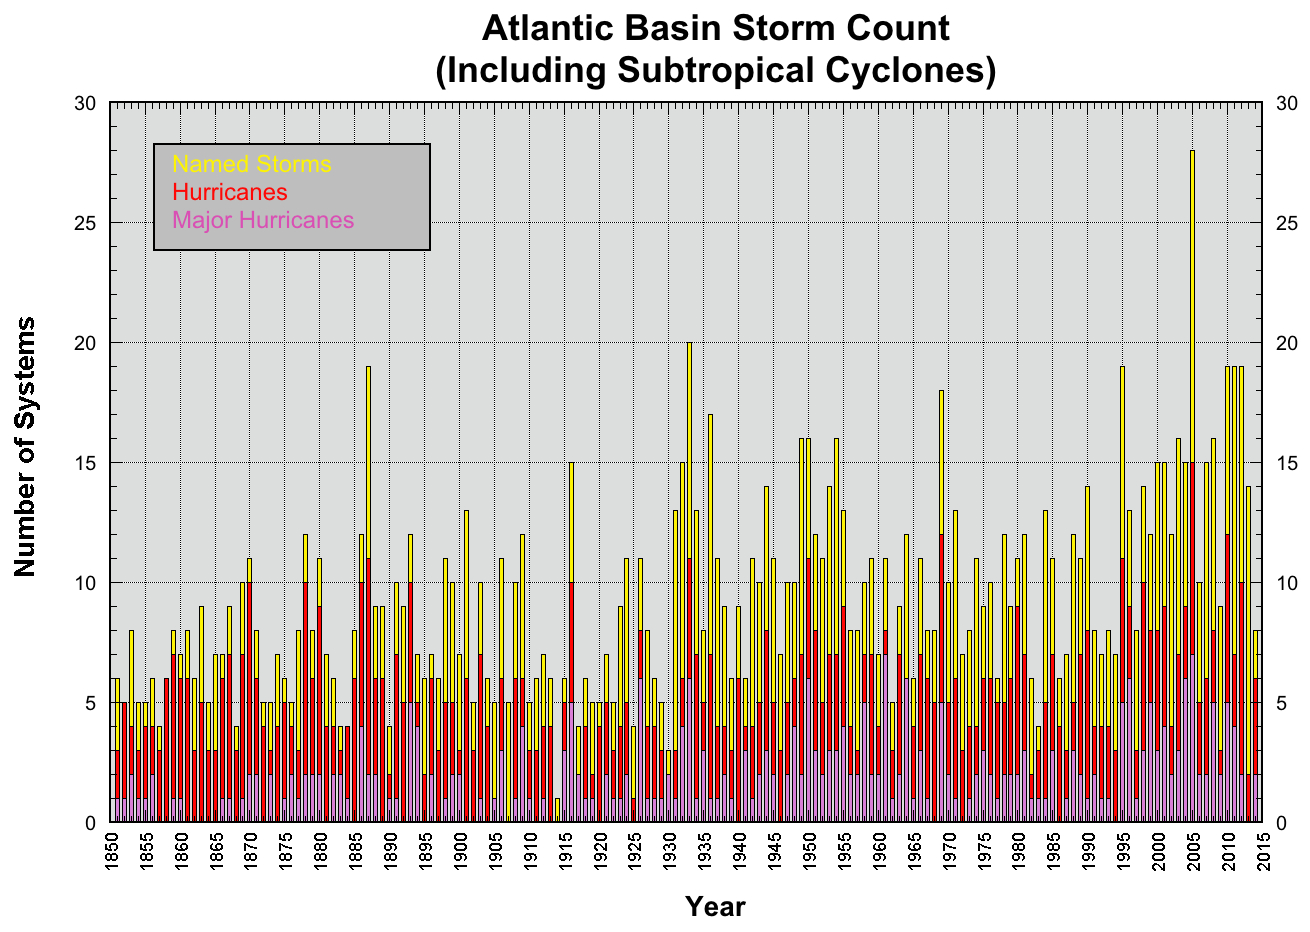 Atlantic Basin Storm Count Since 1850